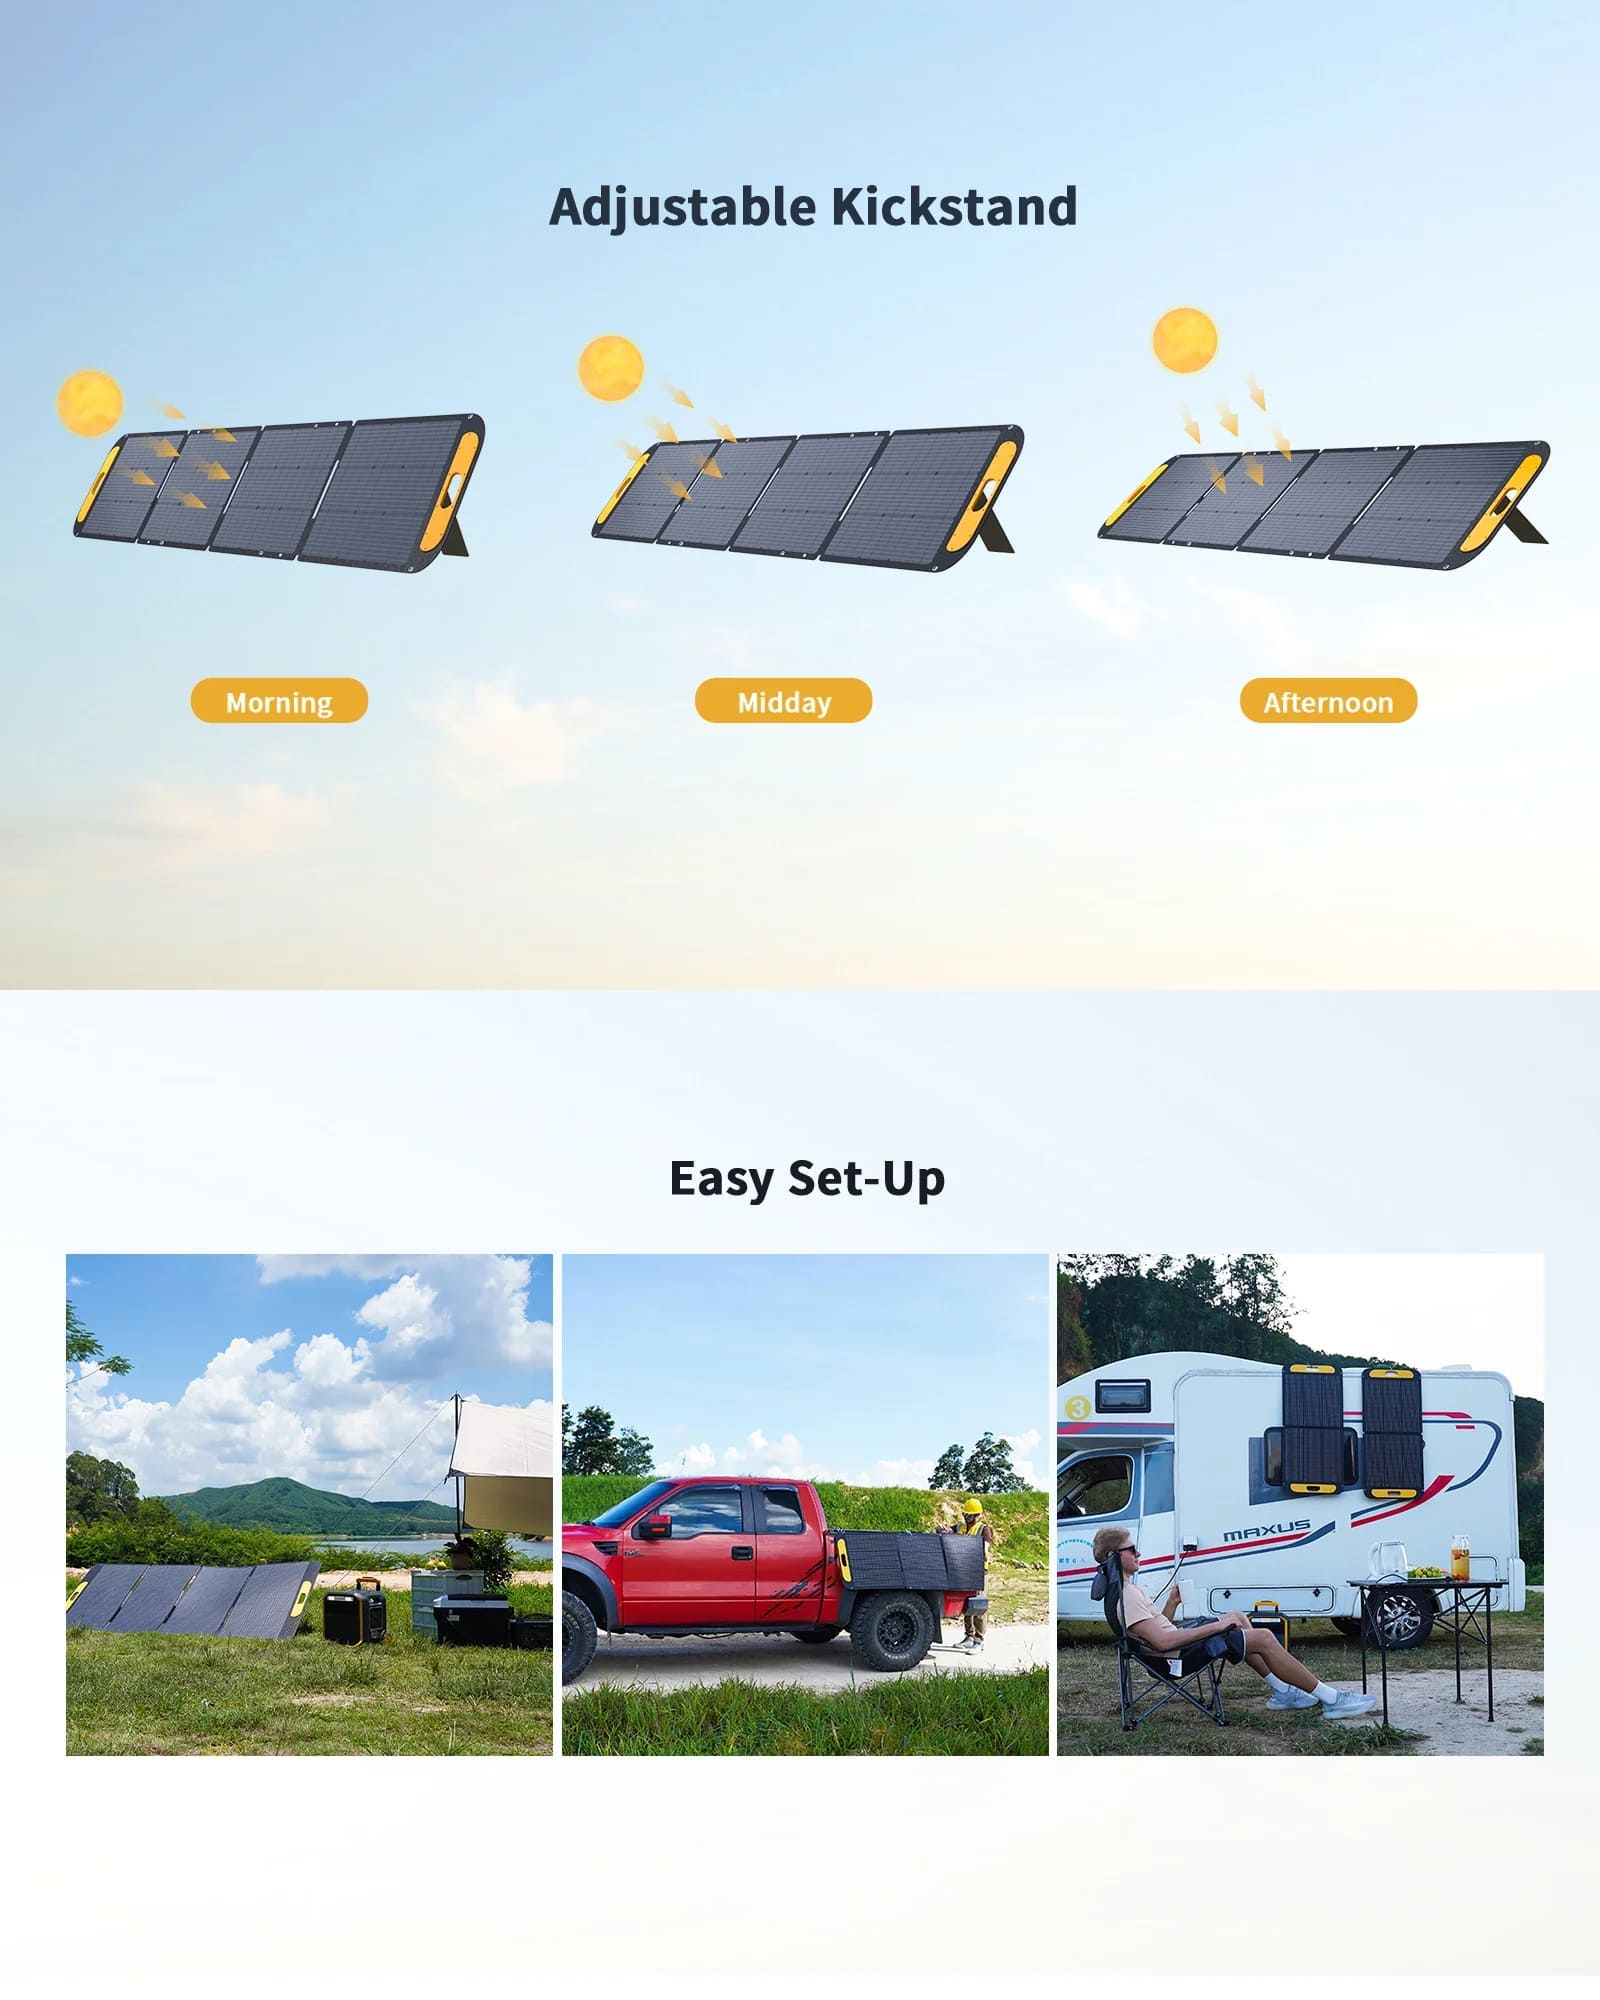 VTOMAN VS220 solar panels can be folded into smaller sizes for easy portability